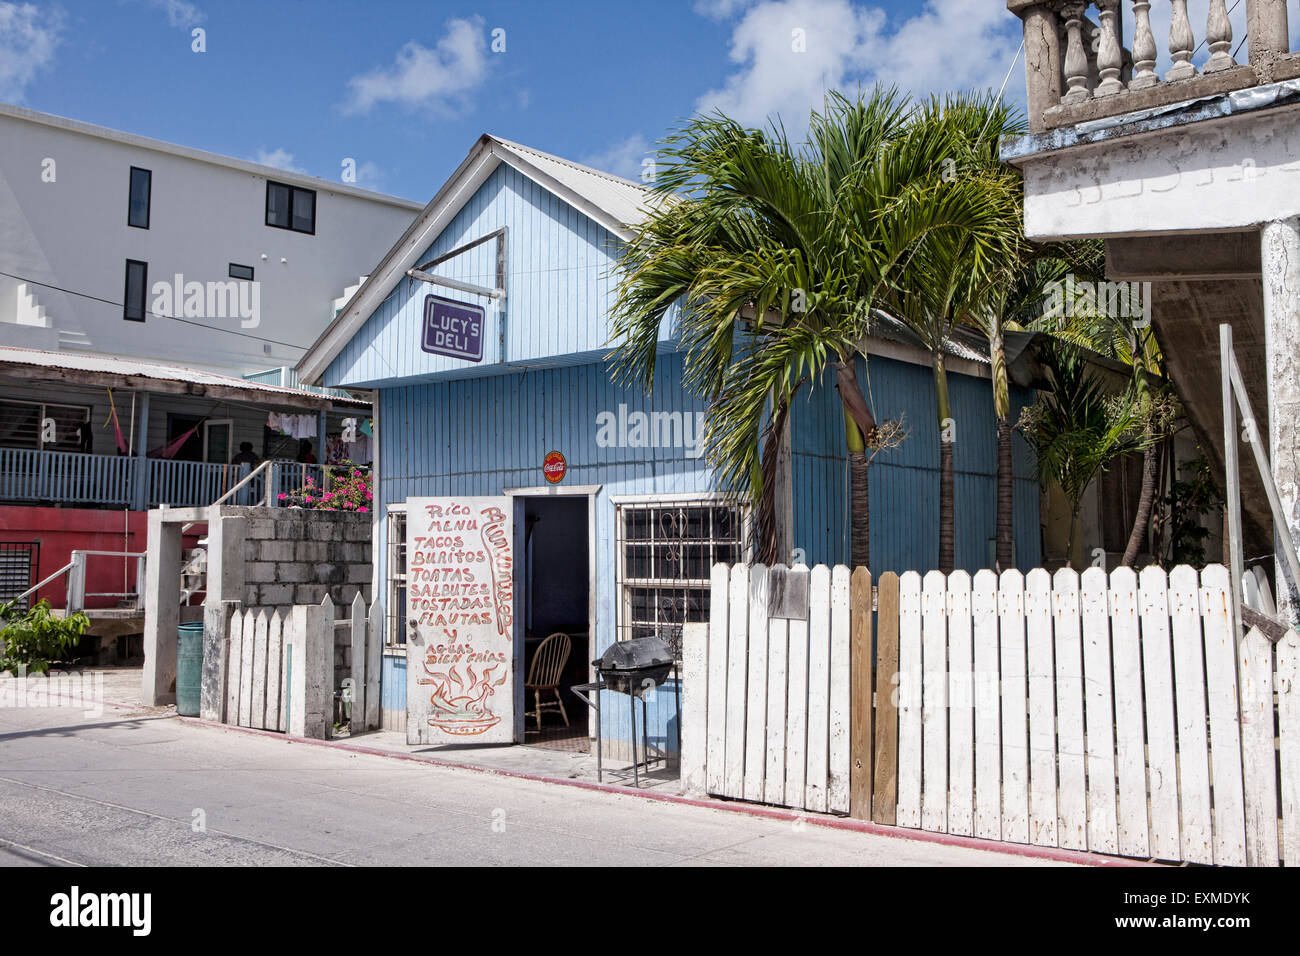 Lucy's Deli exterior in San Pedro, Ambergris Caye, Belize, Central America. Stock Photo